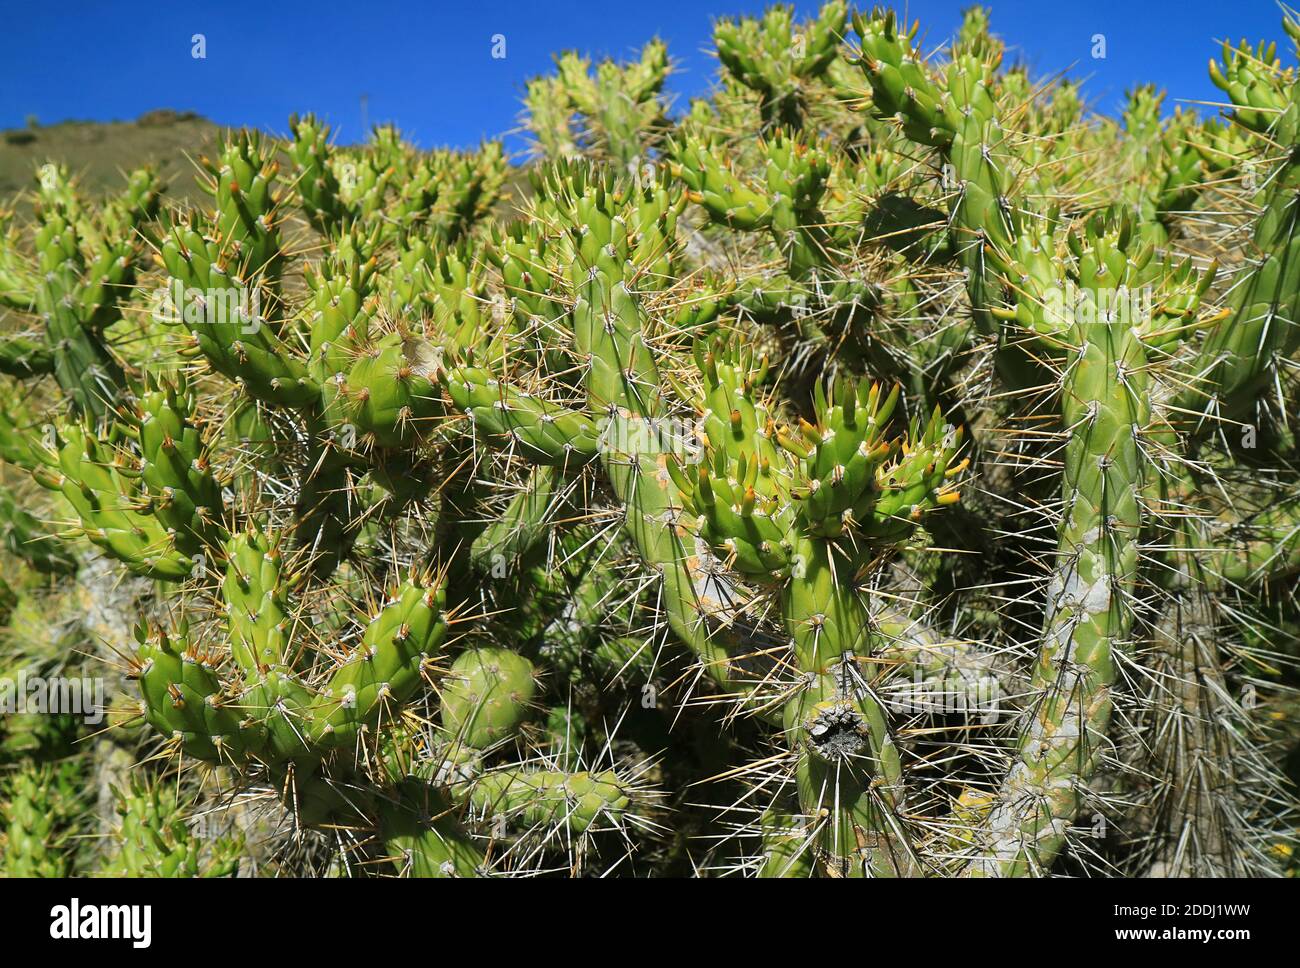 Large Shrub od Wild Eve's needle or Opuntia Subulata Cactus at the Highland of Colca Canyon, Arequipa Region, Peru, South America Stock Photo